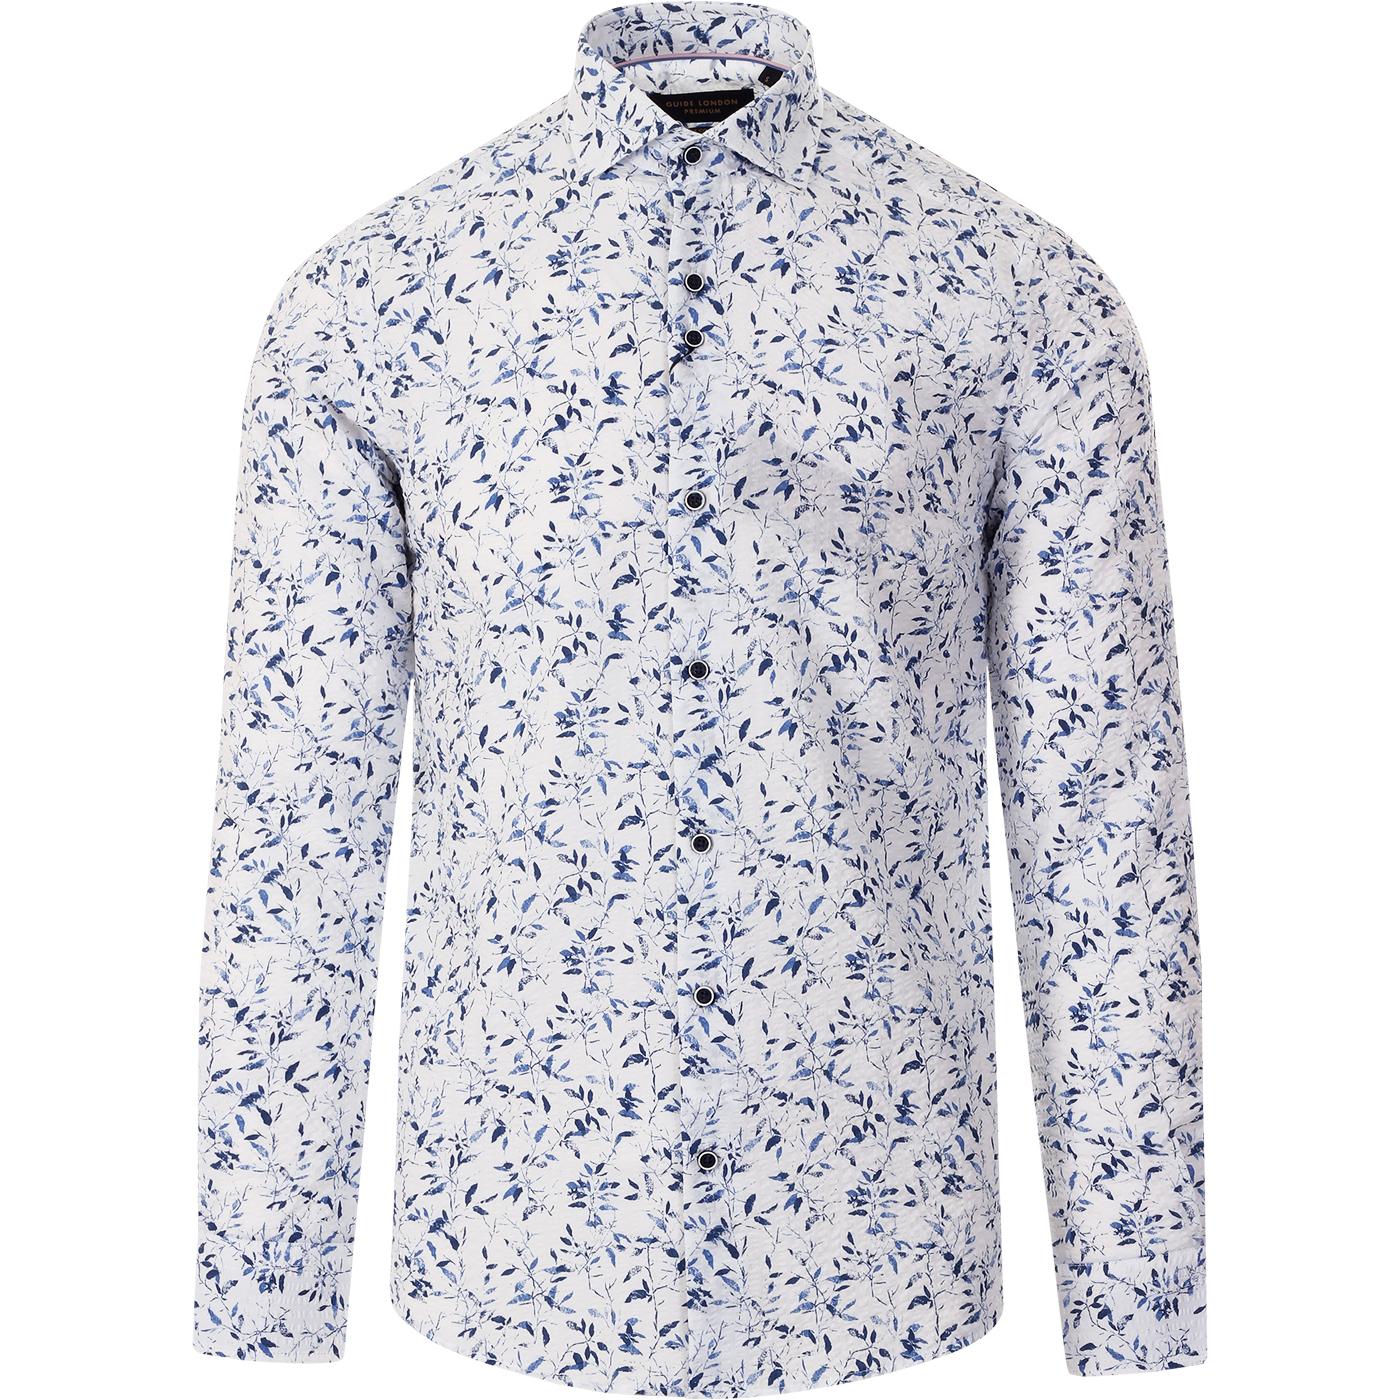 GUIDE LONDON 60s Mod Seersucker Floral Shirt (W/B)